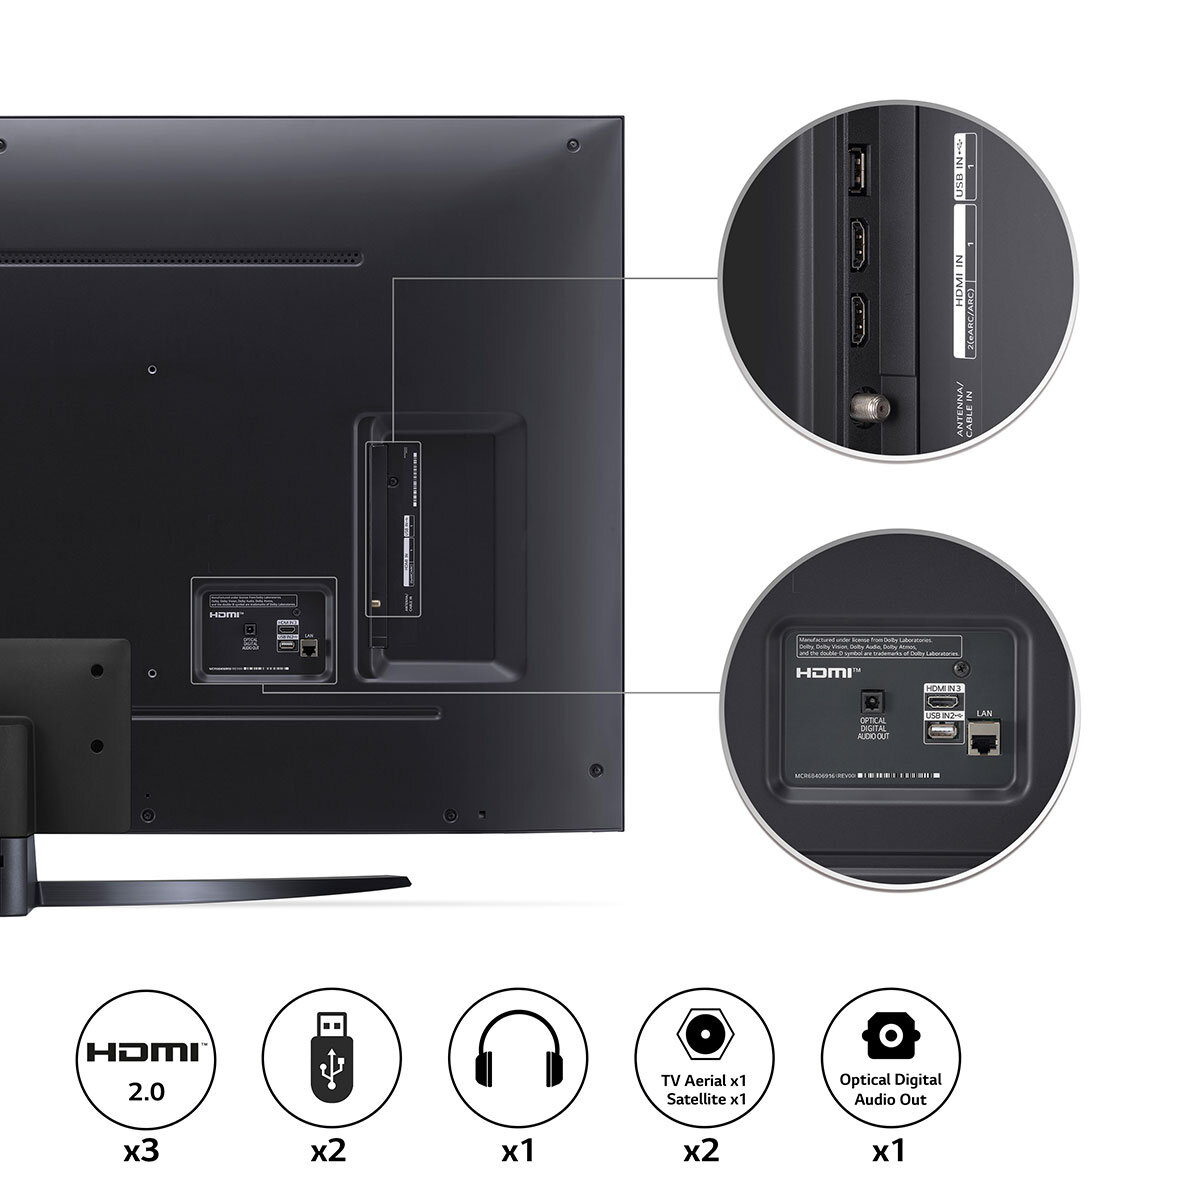 Buy LG 55NANO766QA 55 inch Nanocell 4K Ultra HD Smart TV at Costco.co.uk